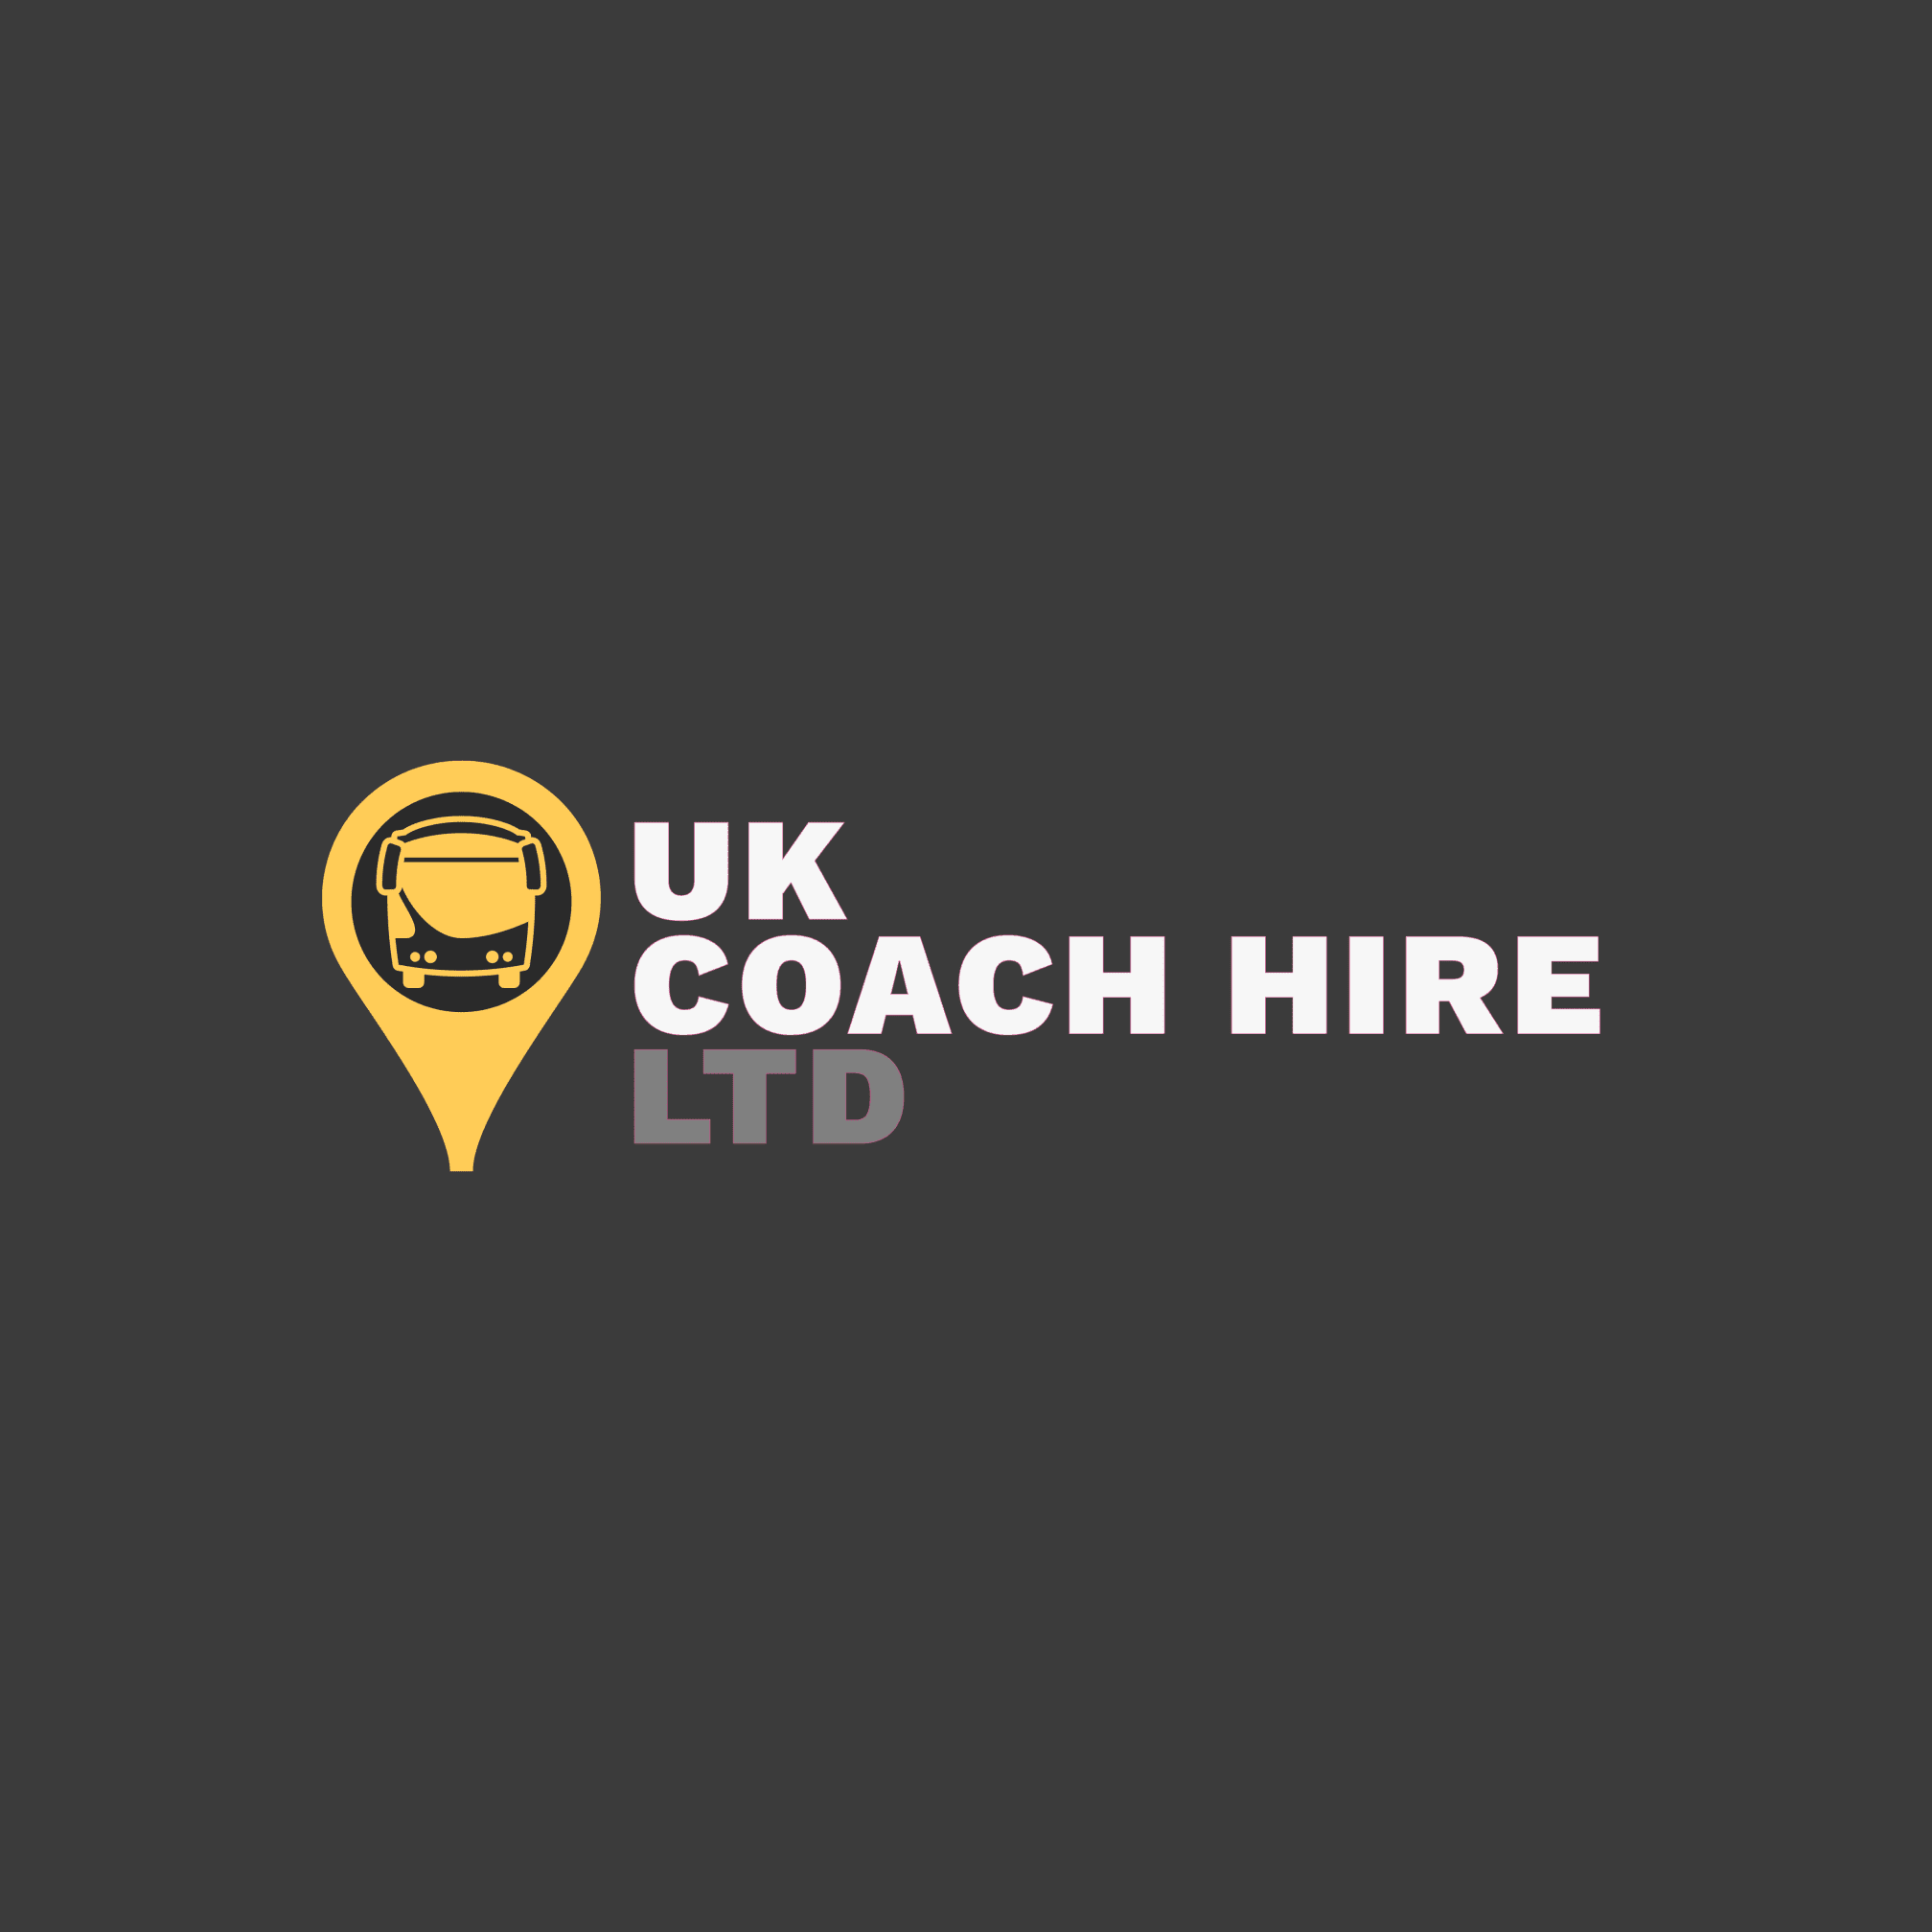 LOGO UK Coach Hire Ltd Manchester 03301 335633